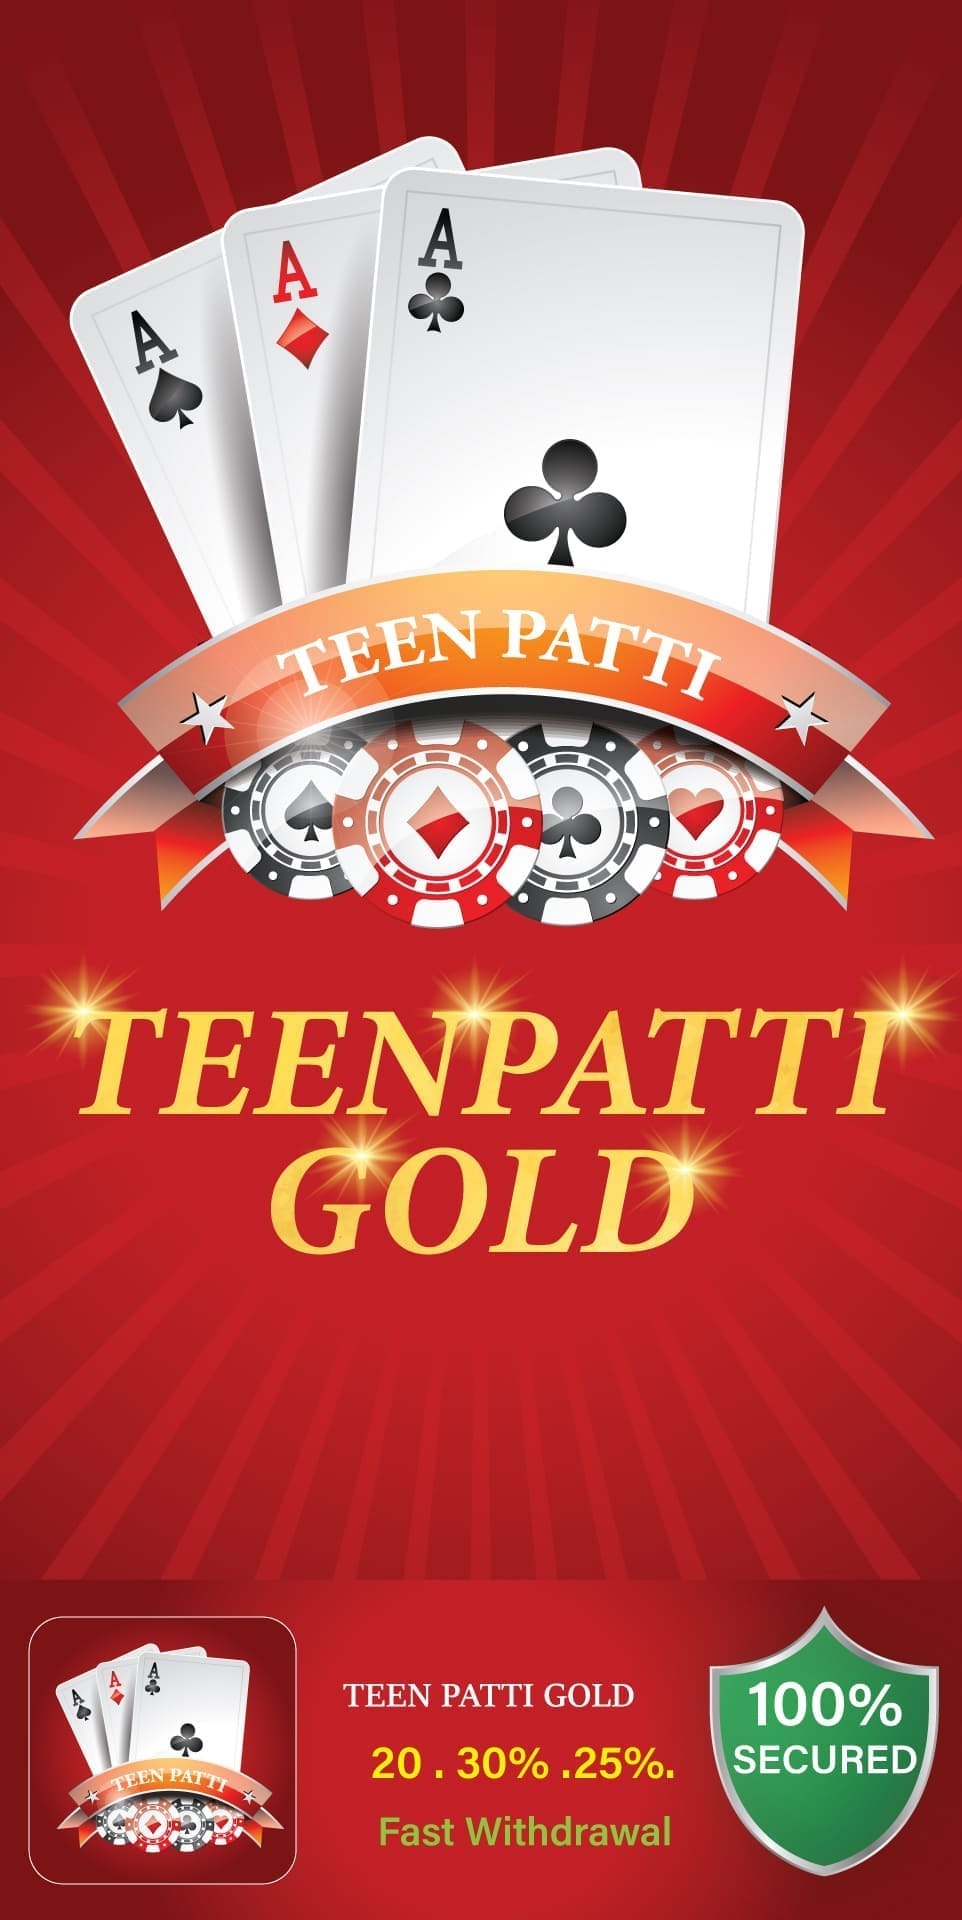 Teen Patti Gold APK